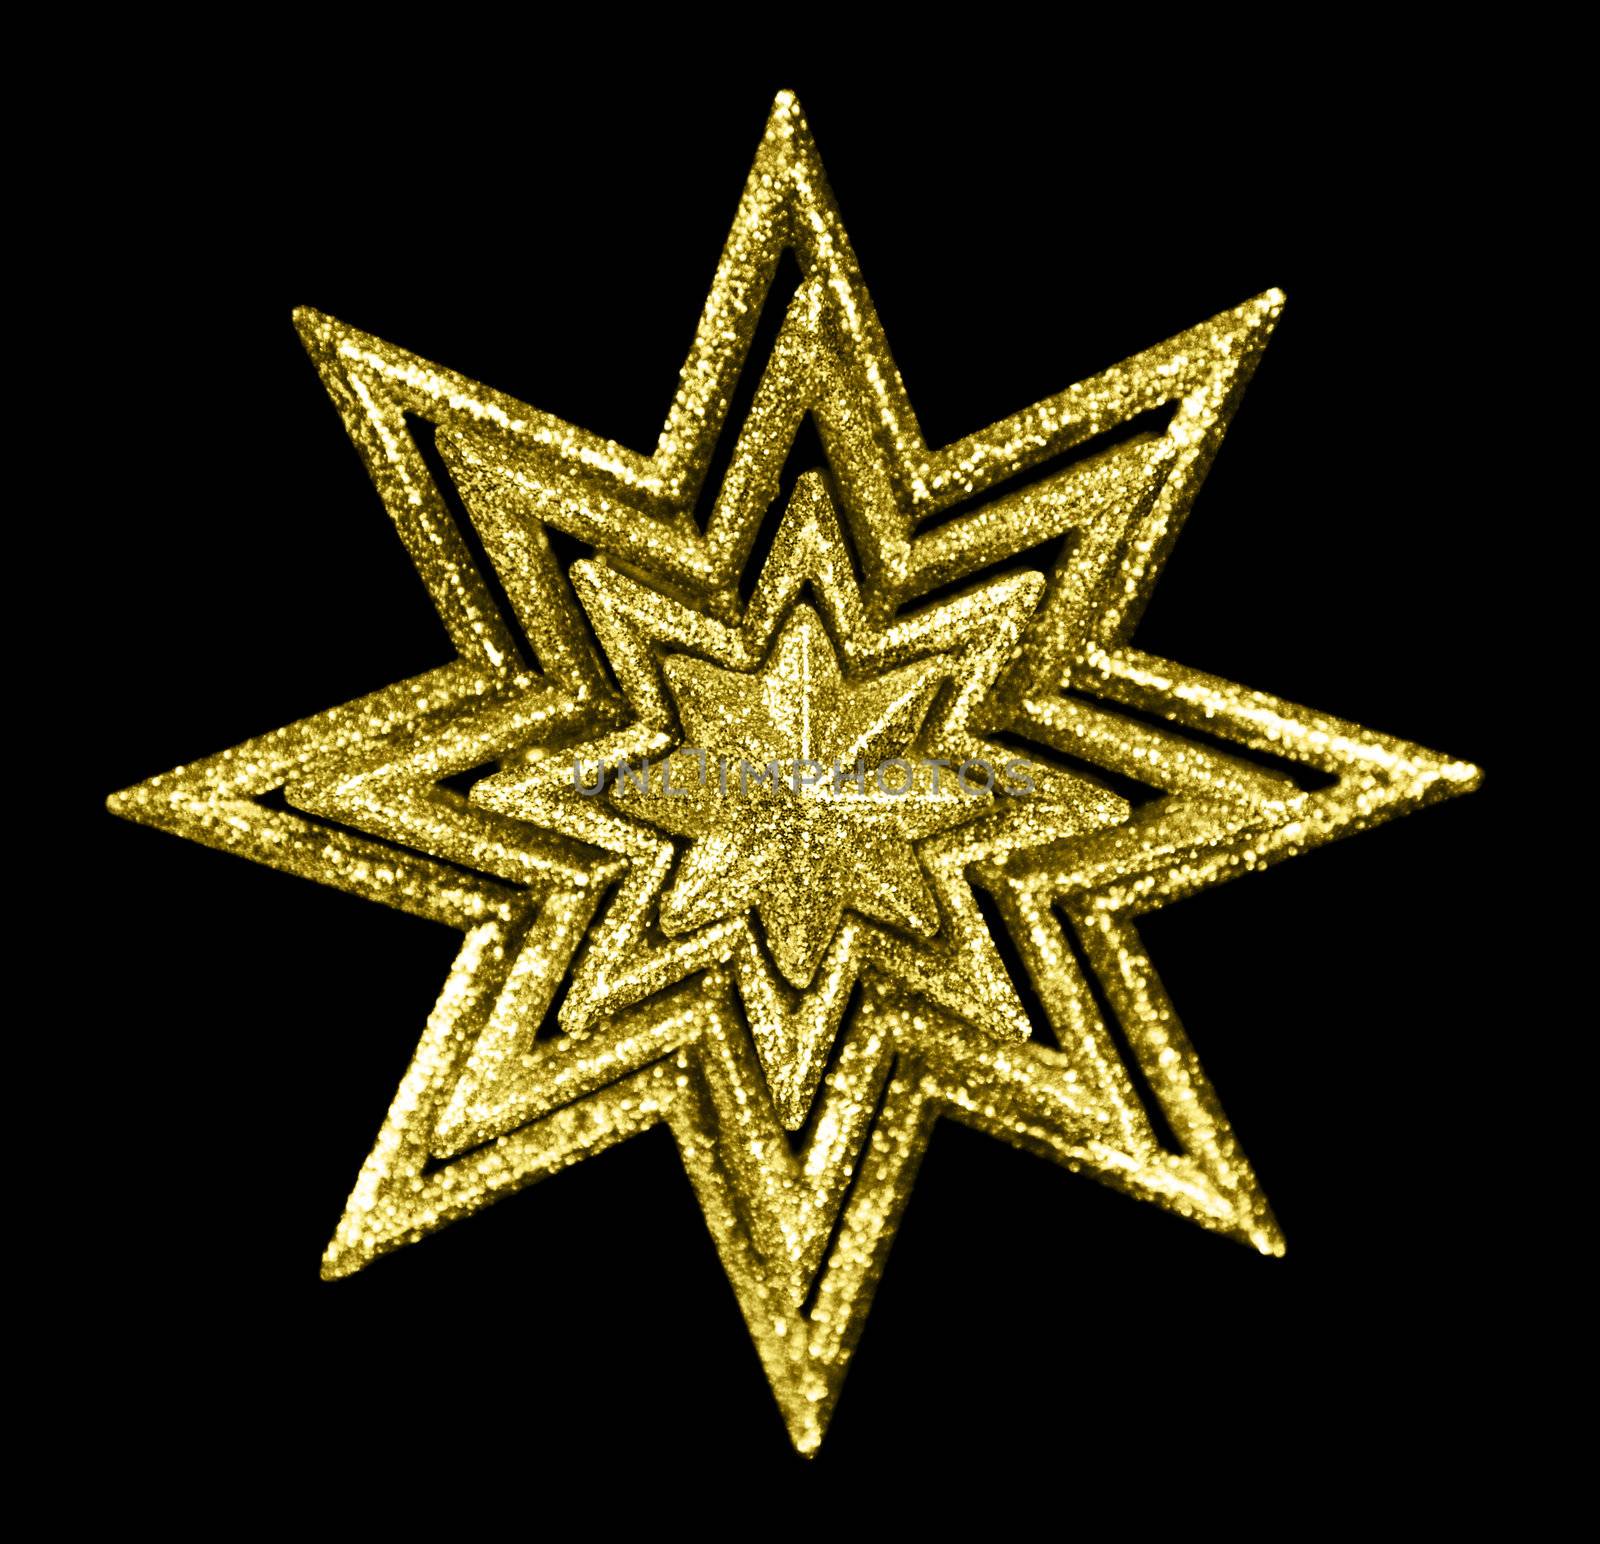 A gold Christmas star against black